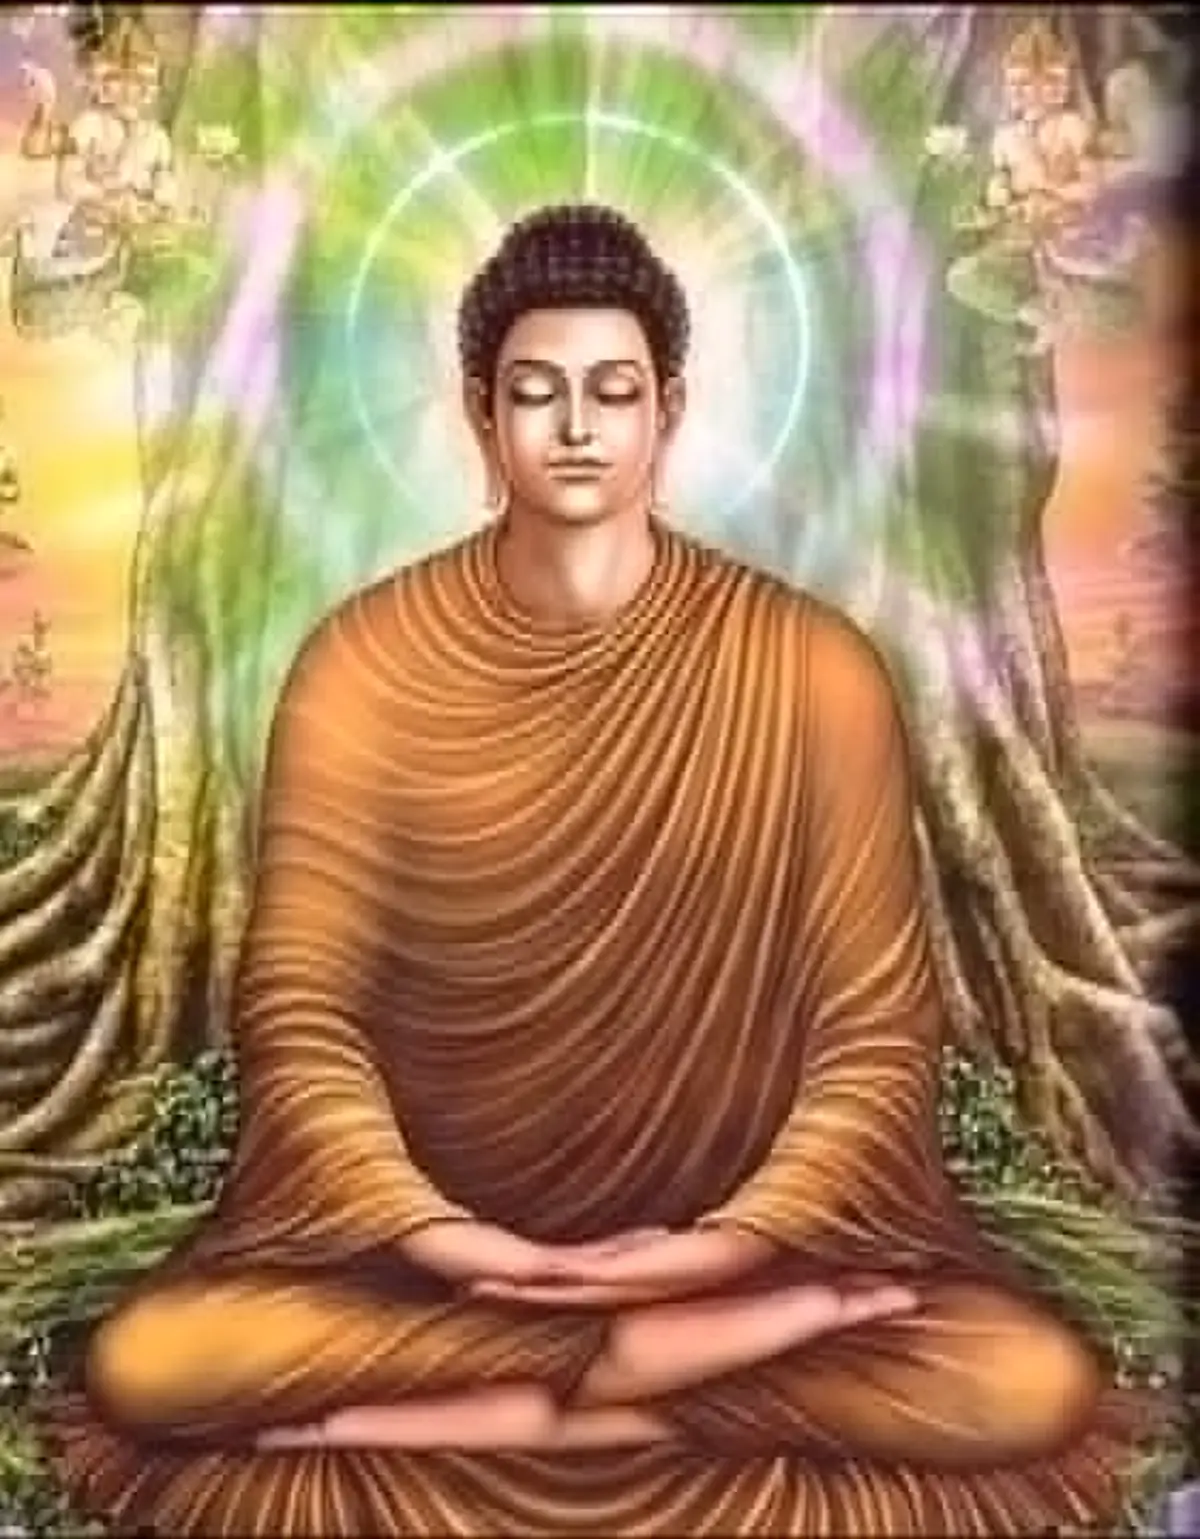 image from What Is Buddhist Vesak?